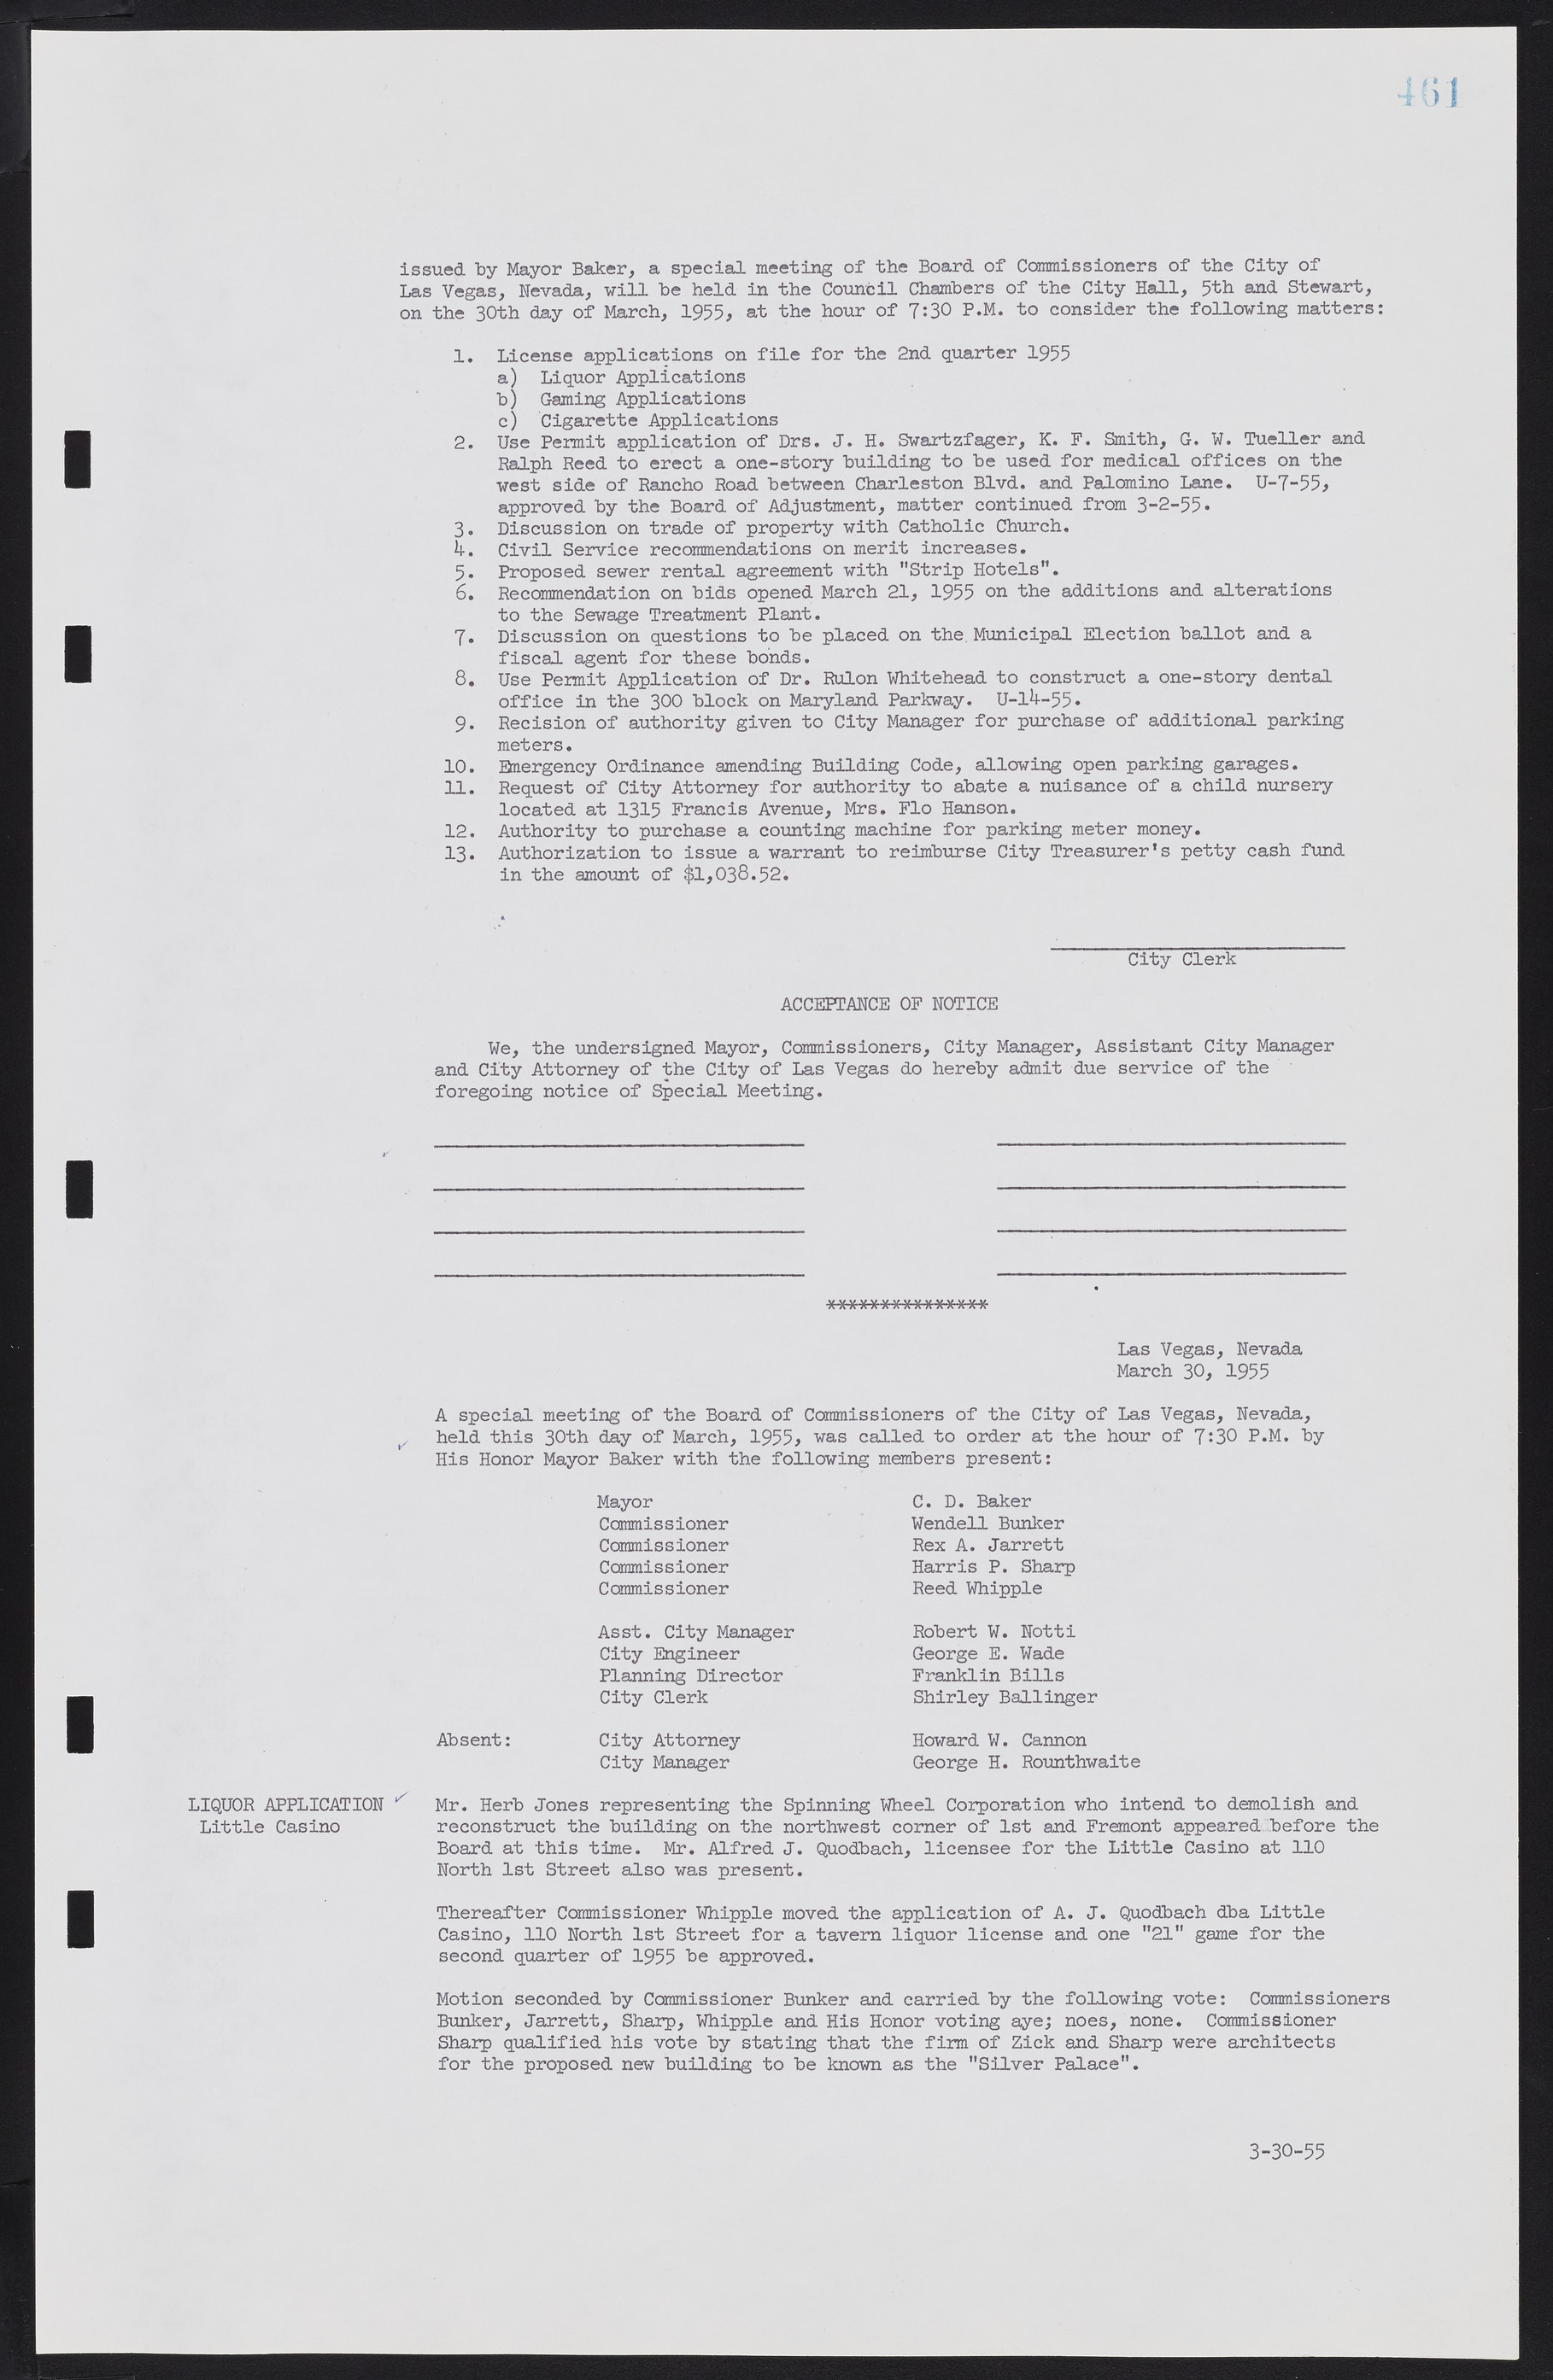 Las Vegas City Commission Minutes, February 17, 1954 to September 21, 1955, lvc000009-467